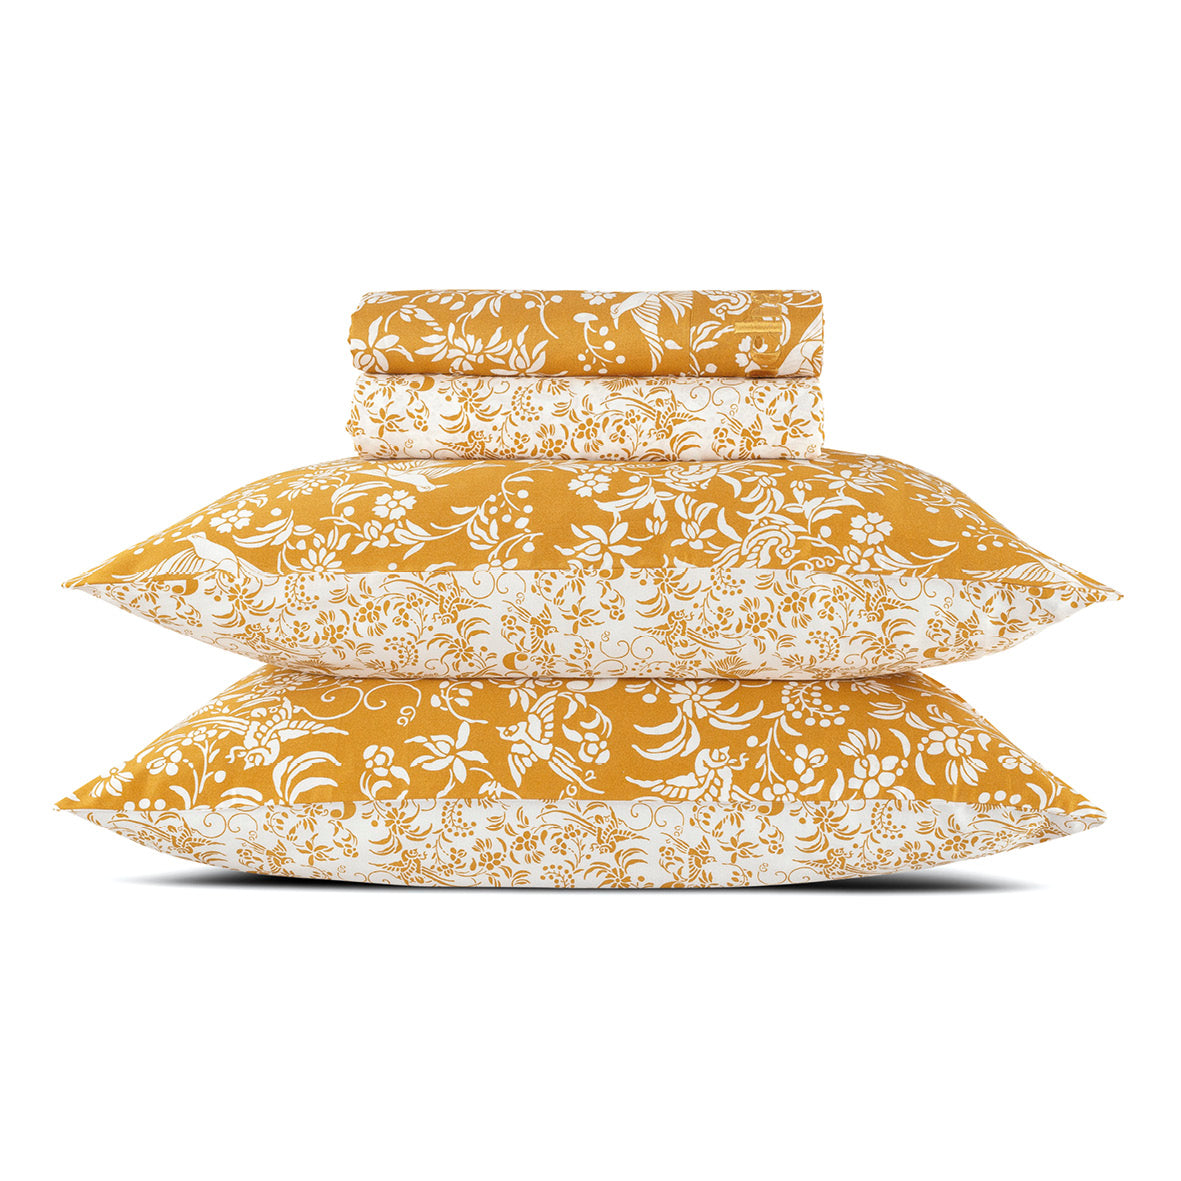 Sheet set : fitted sheet, flat sheet, pillowcase(s) in satin cotton - Birds yellow Drap plat : 230 x 290 cm Drap-housse : 170 180 x 190 200 cm